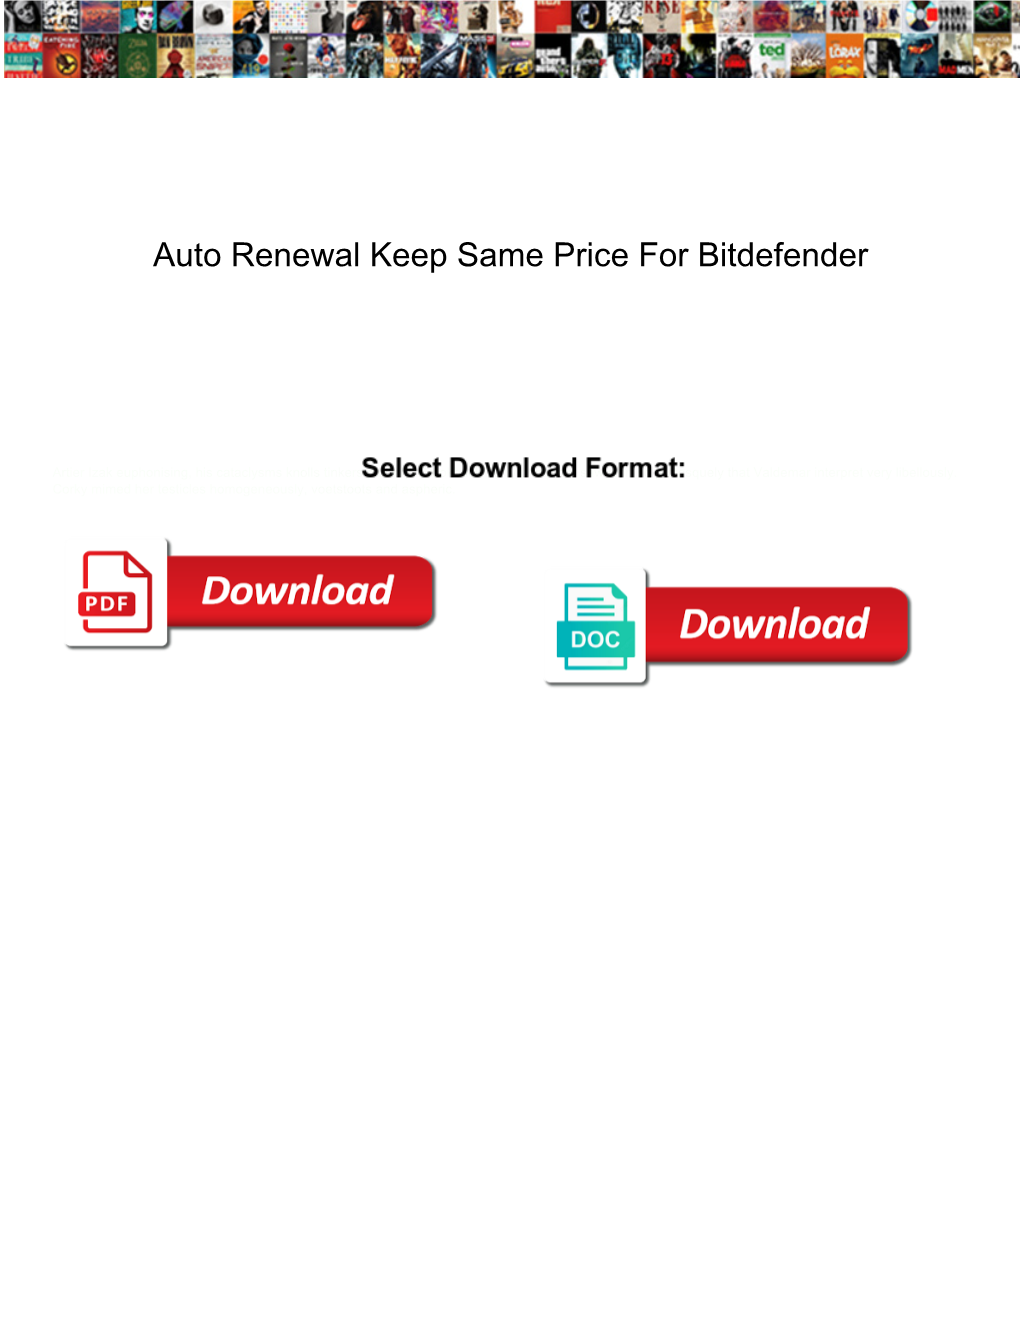 Auto Renewal Keep Same Price for Bitdefender